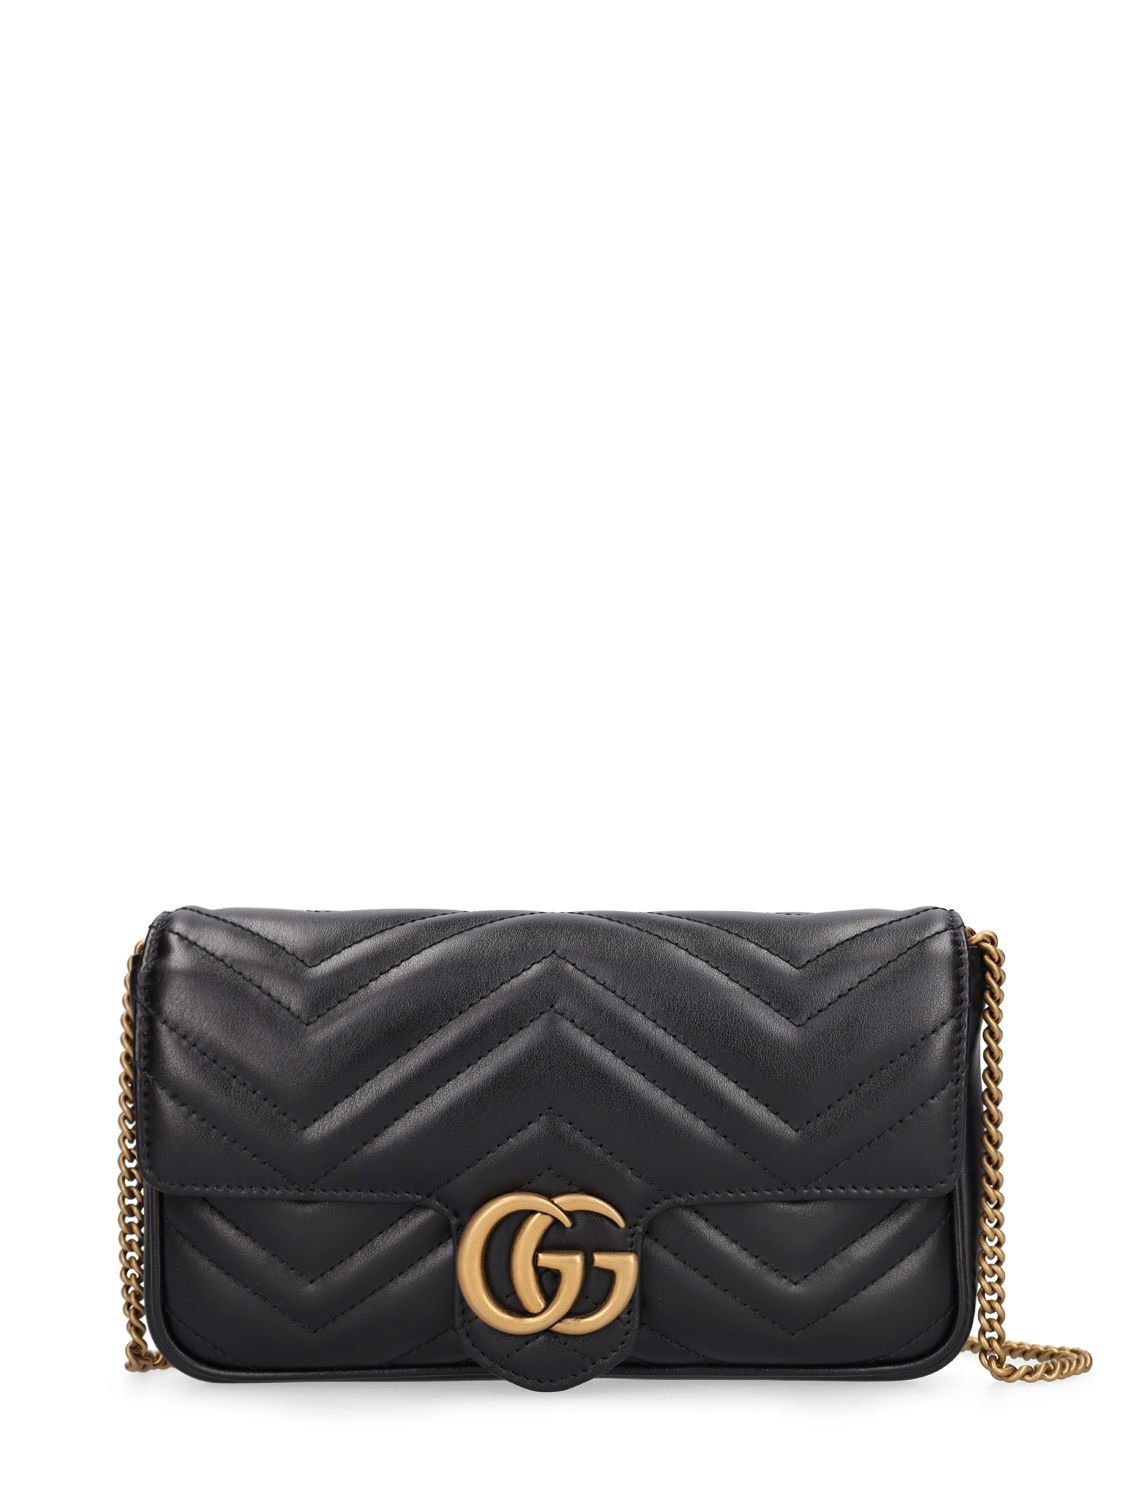 Image of Mini Gg Marmont 2.0 Leather Shoulder Bag